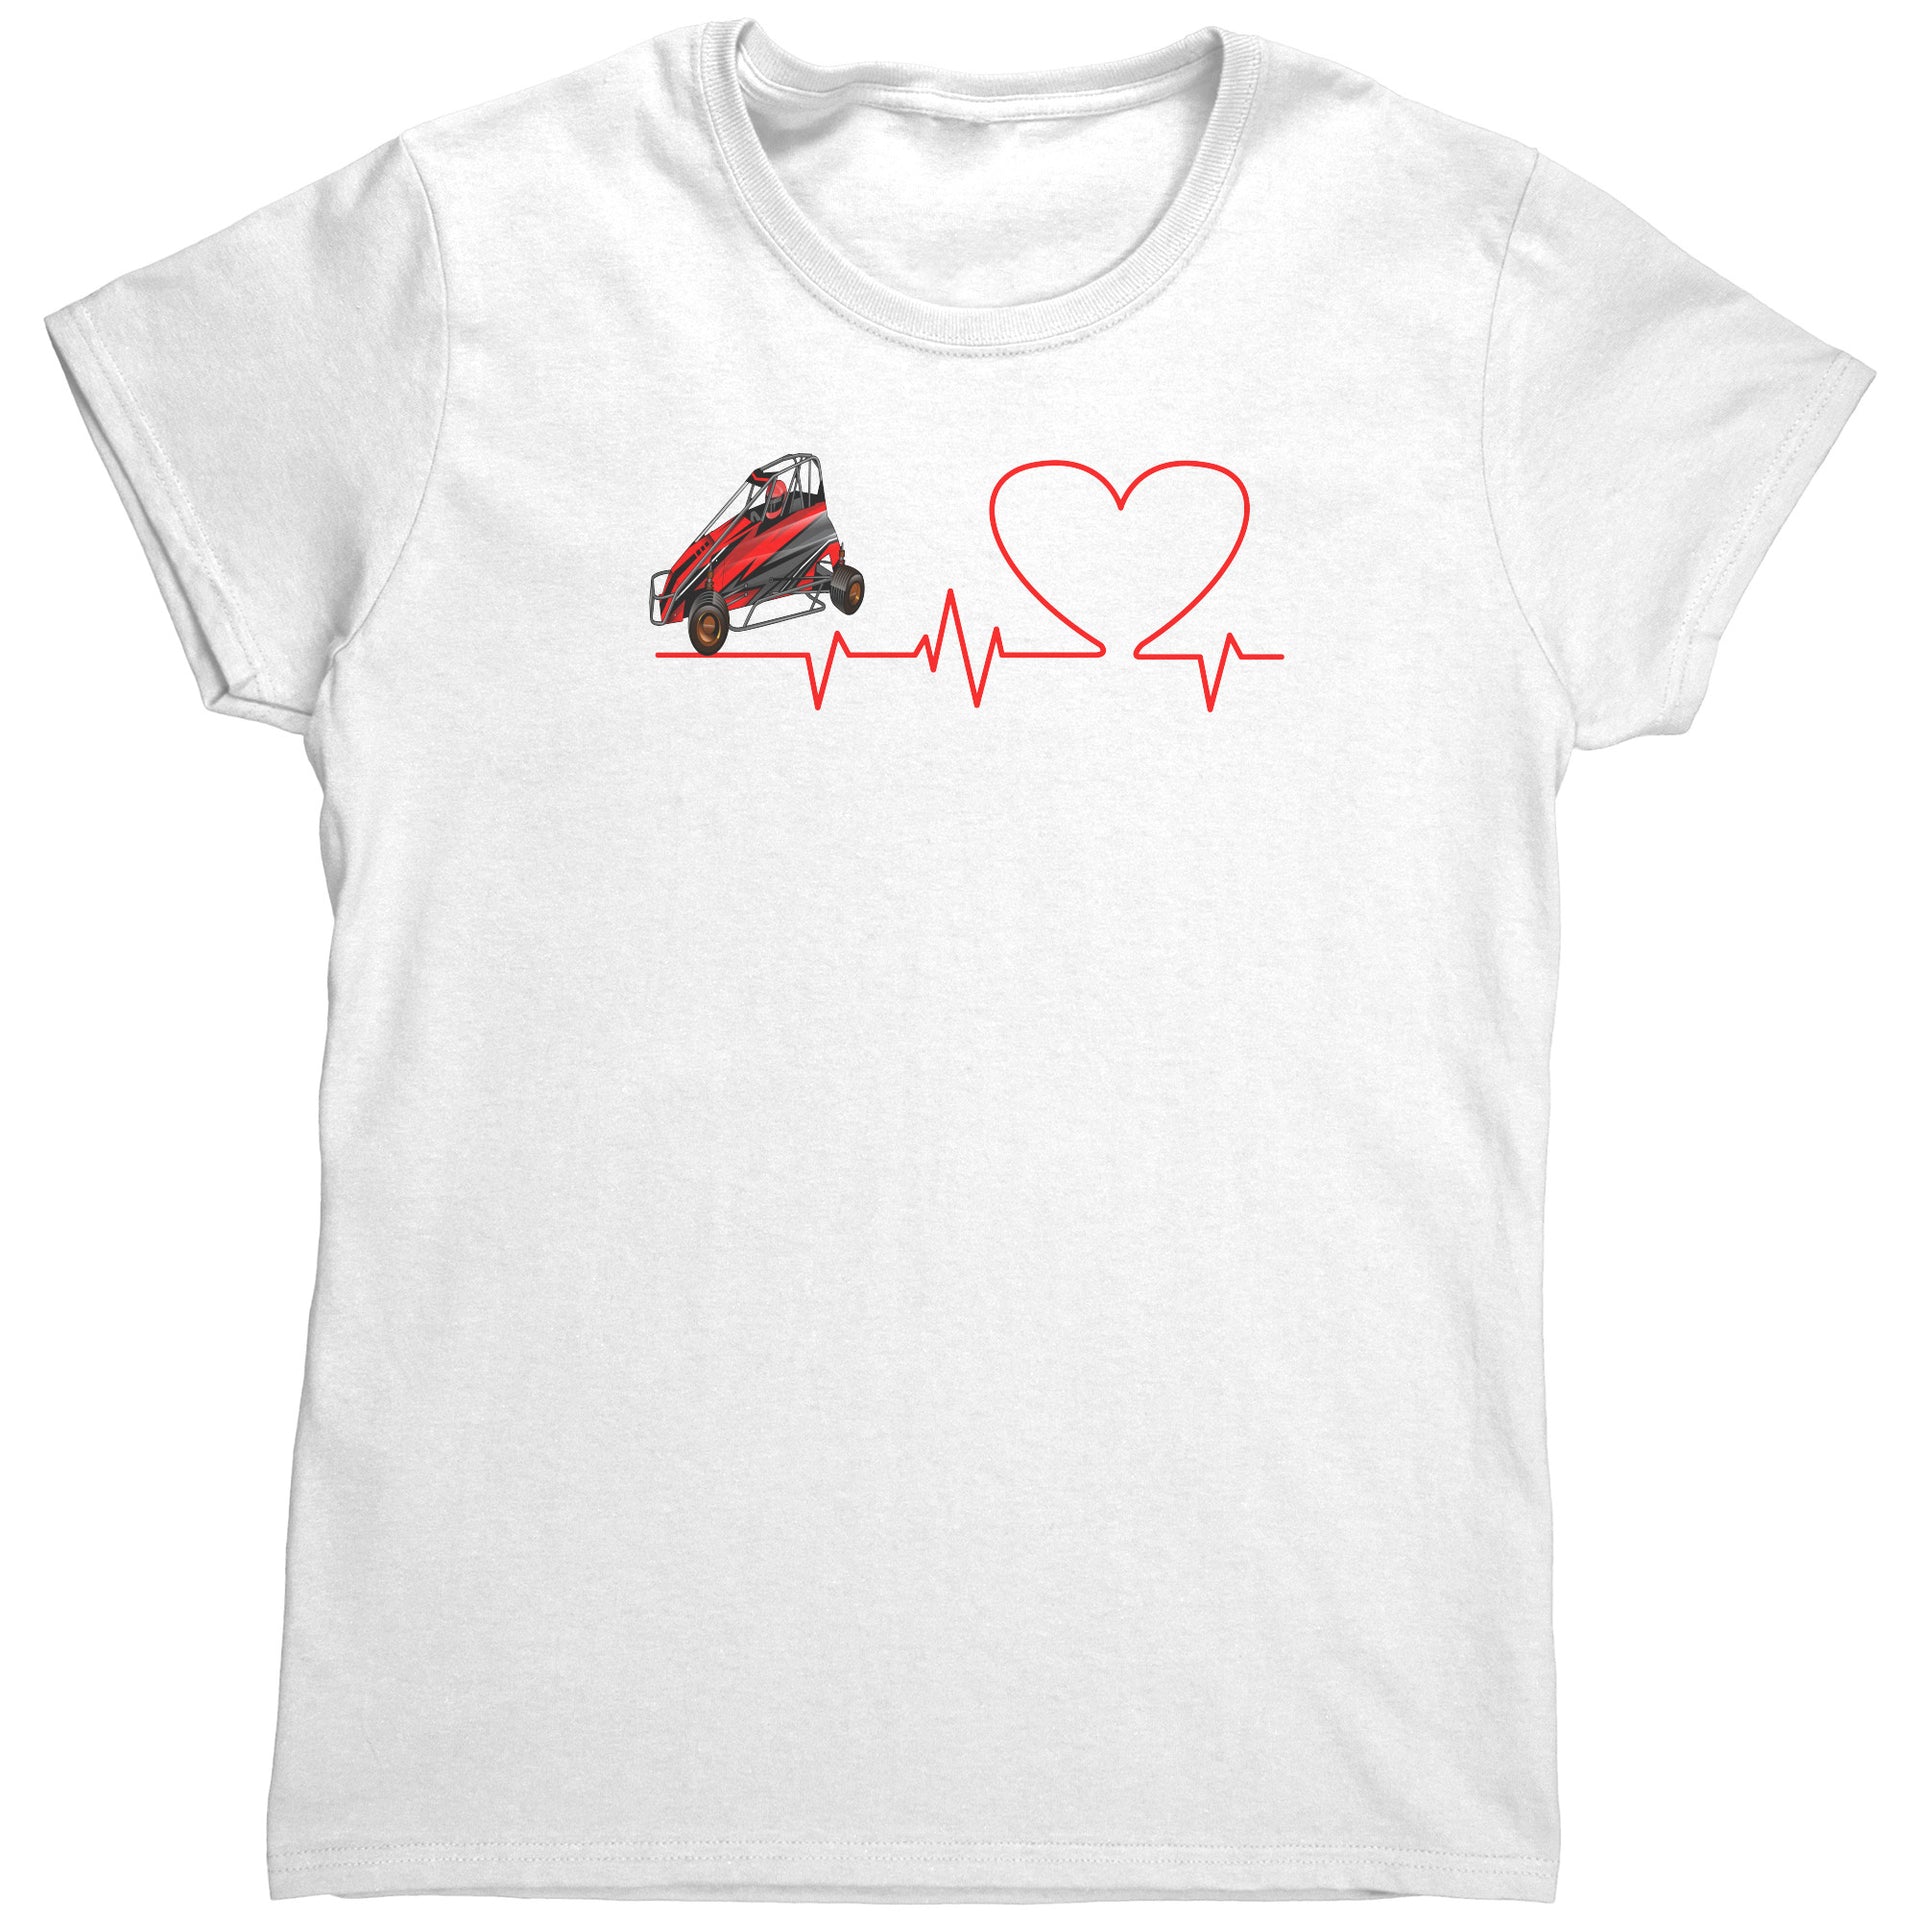 Midget Car Heartbeat T-Shirts